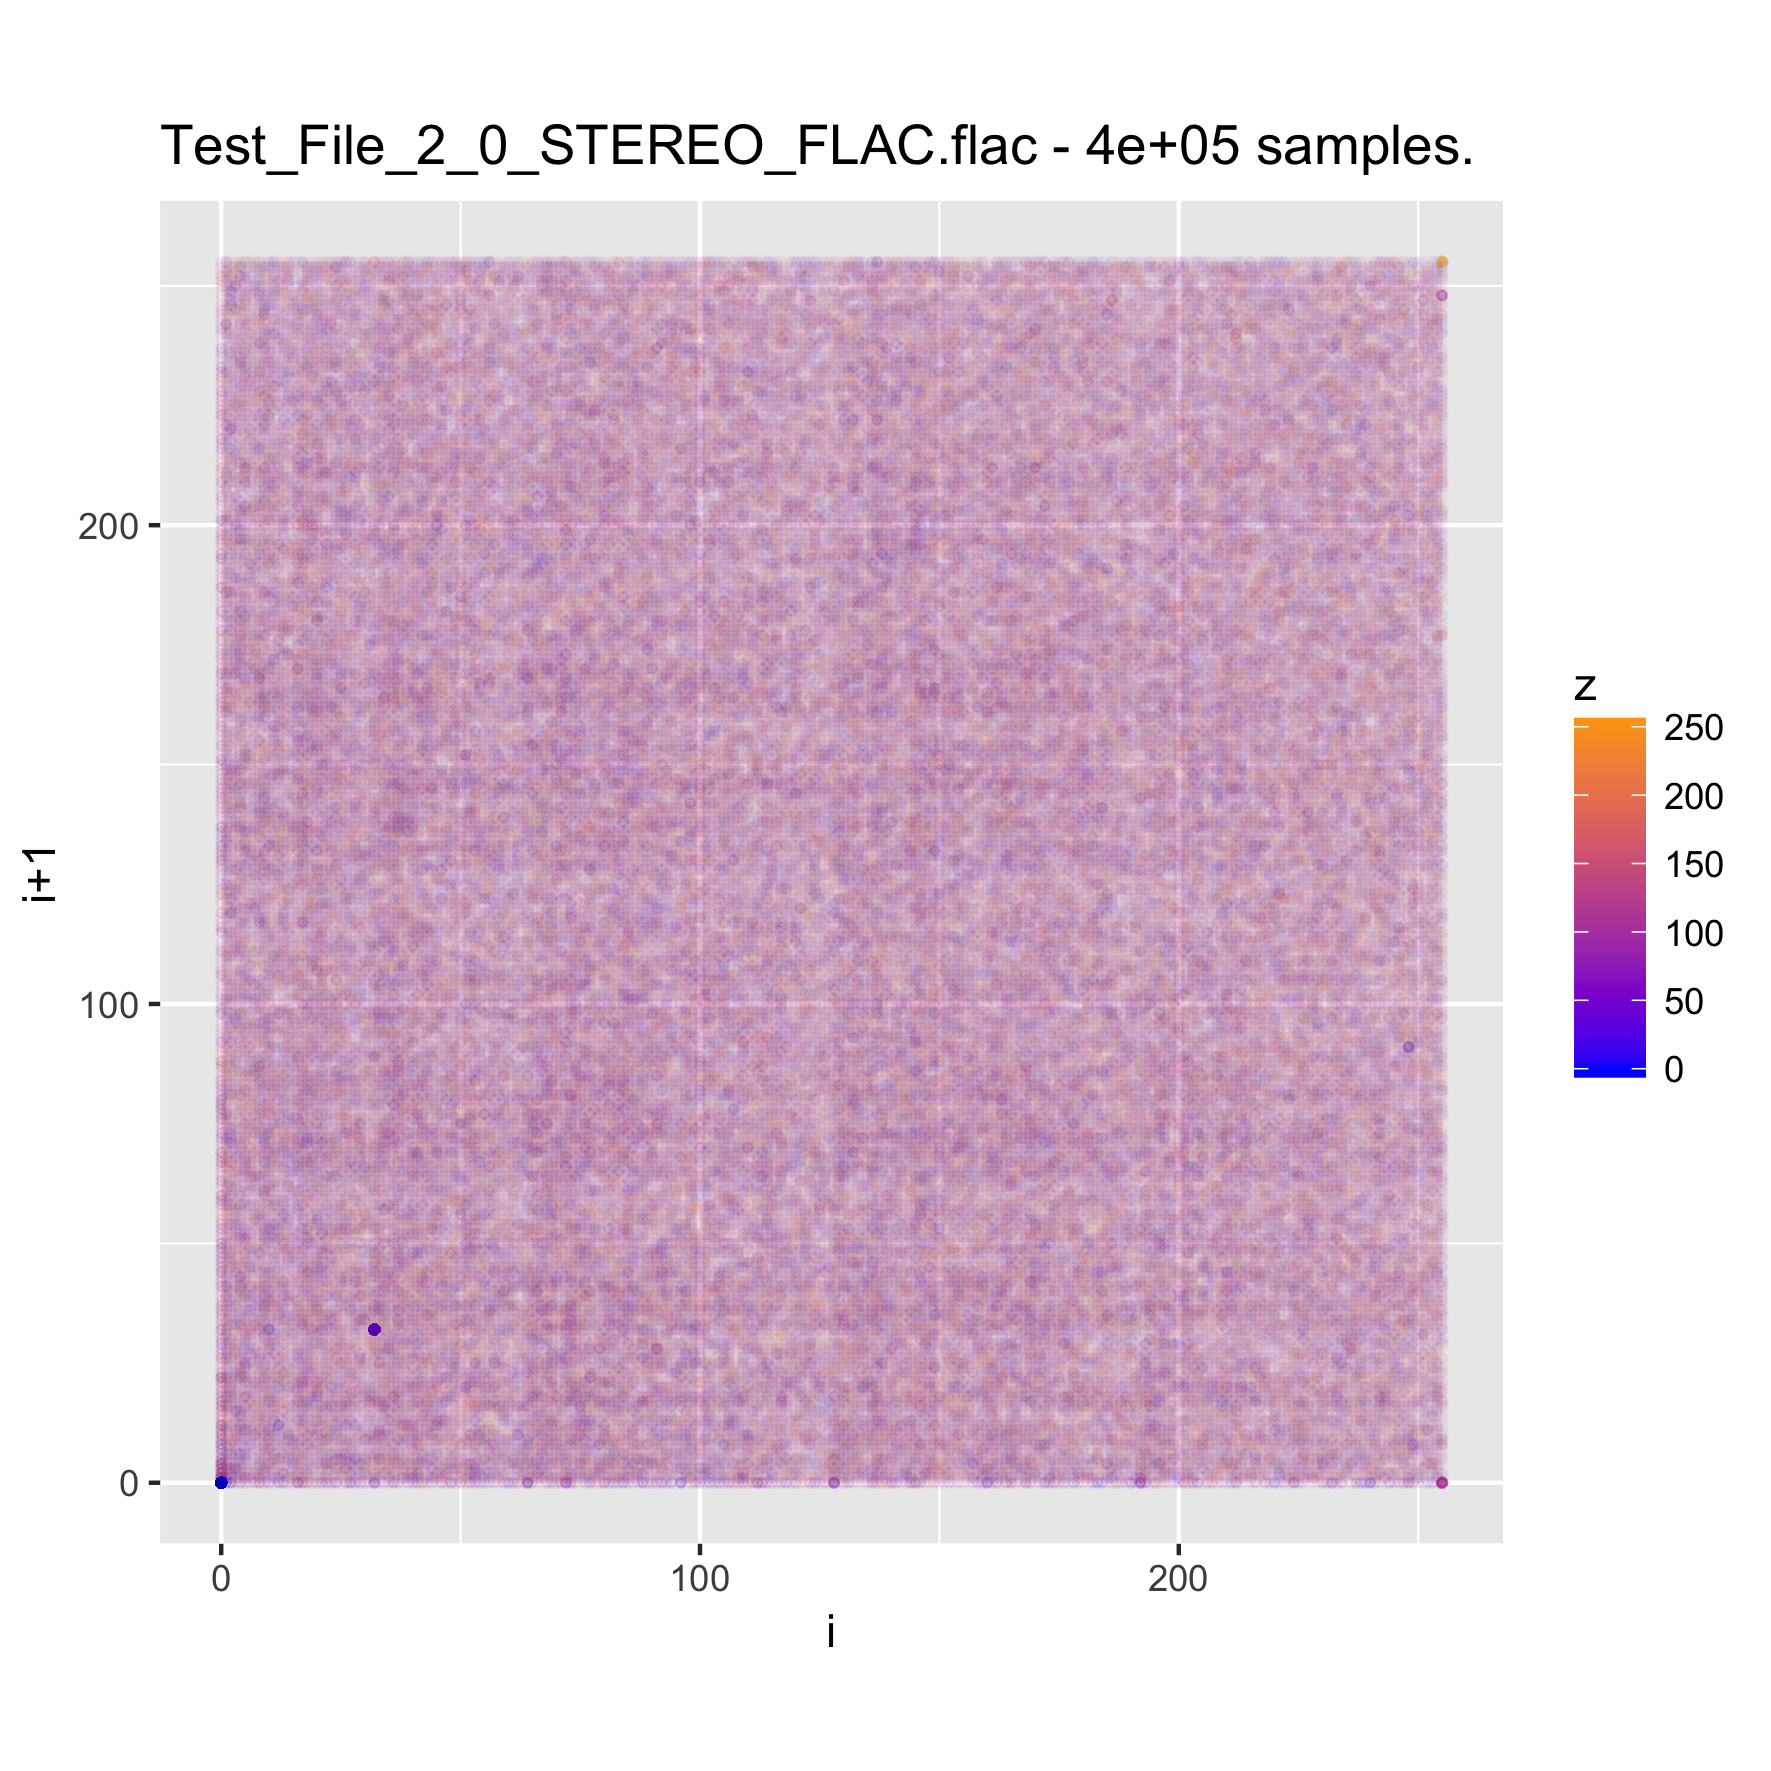 /img/binViz/plot__sampled_4e+05_Test_File_2_0_STEREO_FLAC:flac.png